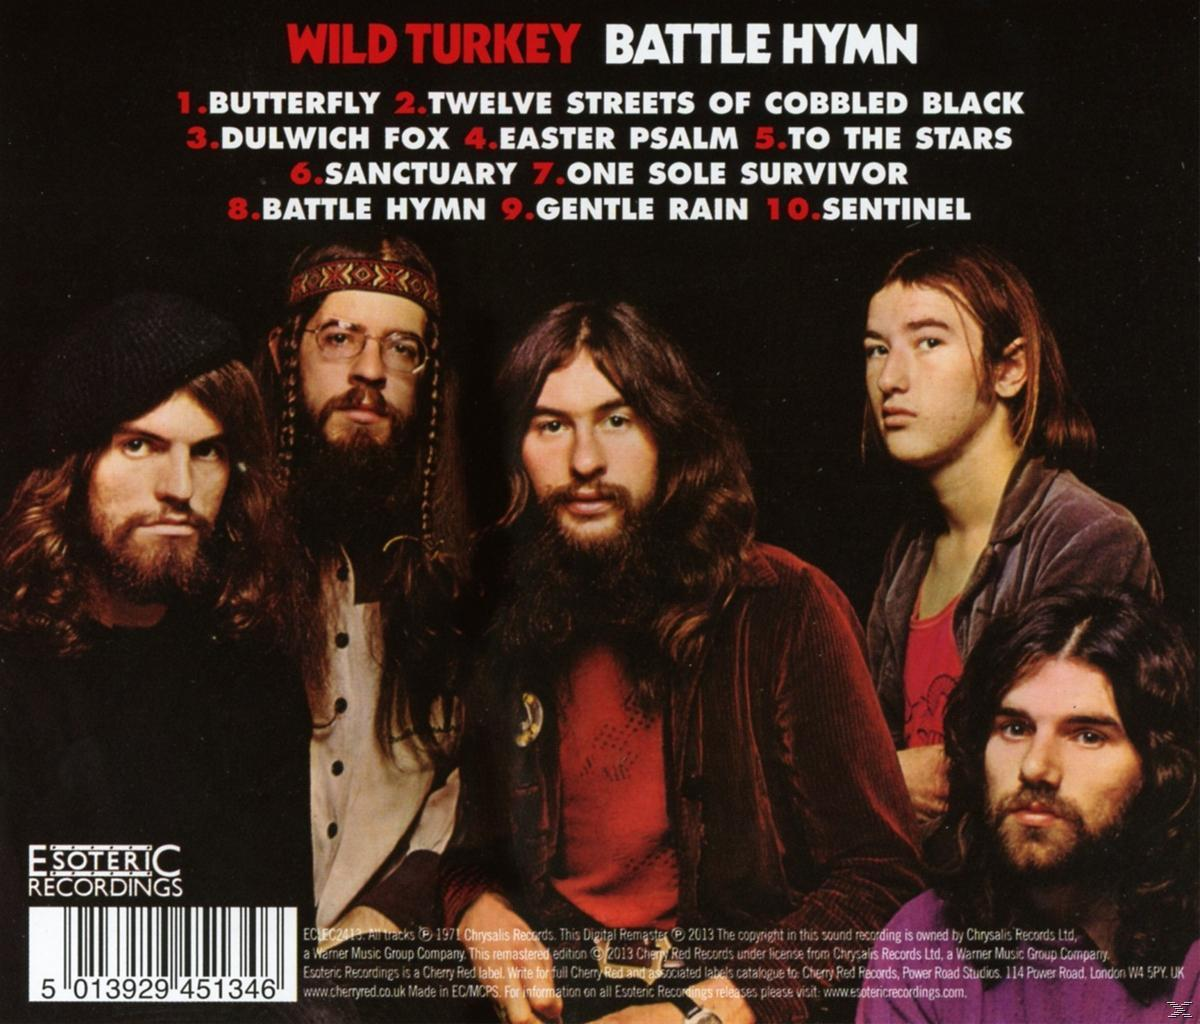 Wild Turkey - Battle (CD) (Remastered Edition) - Hymn